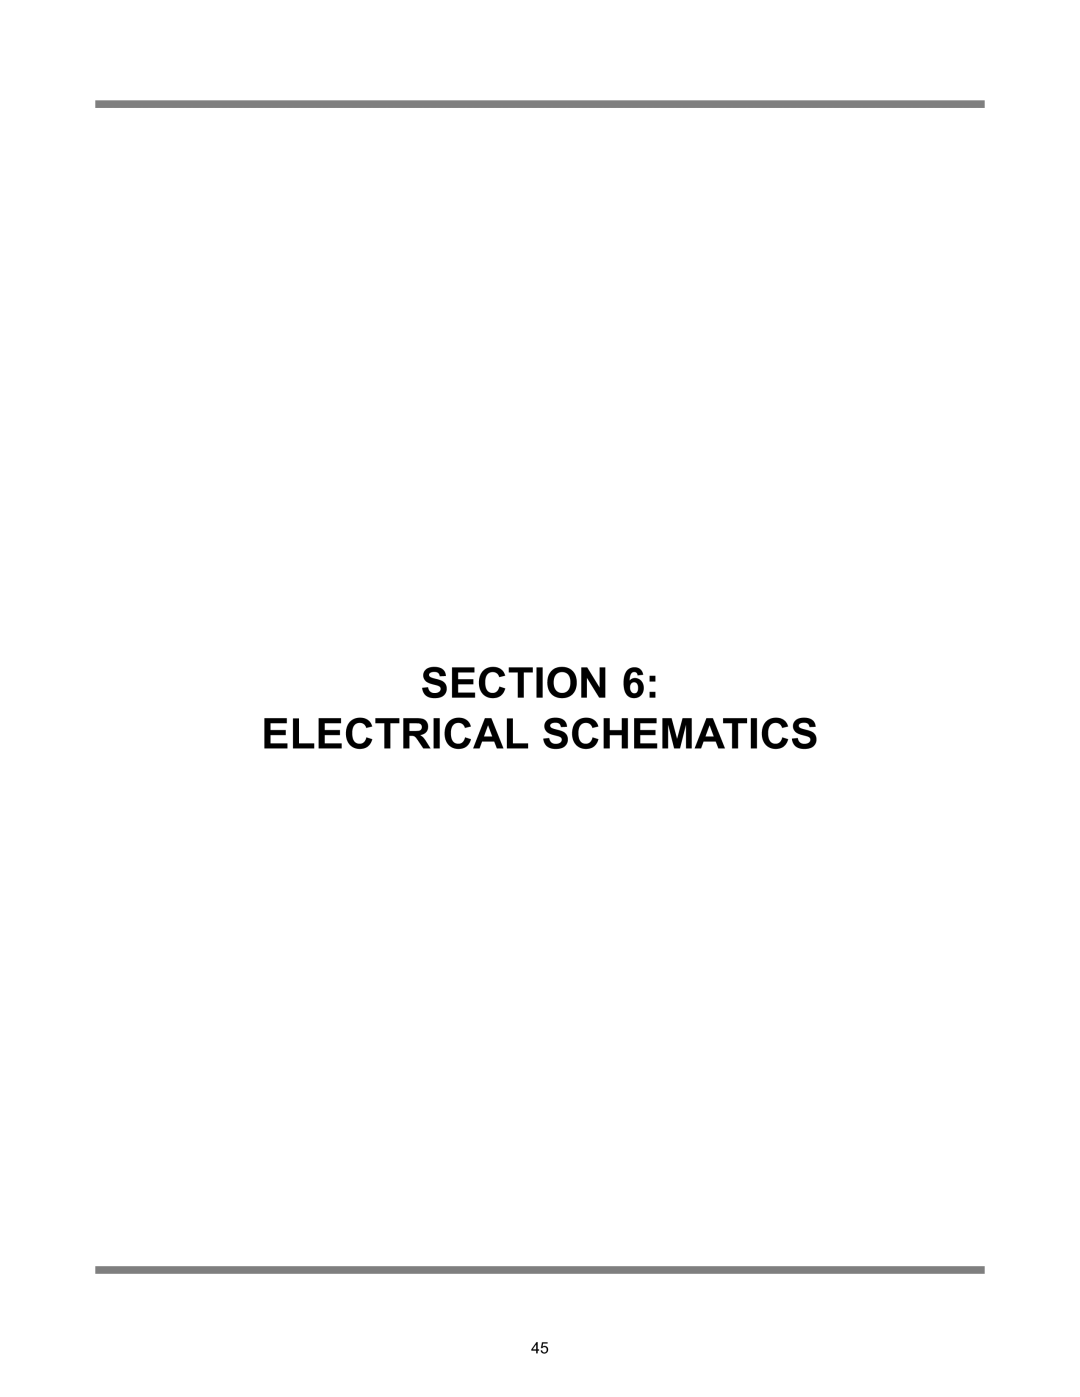 Jackson Avenger HT, Avenger LT technical manual Section Electrical Schematics 